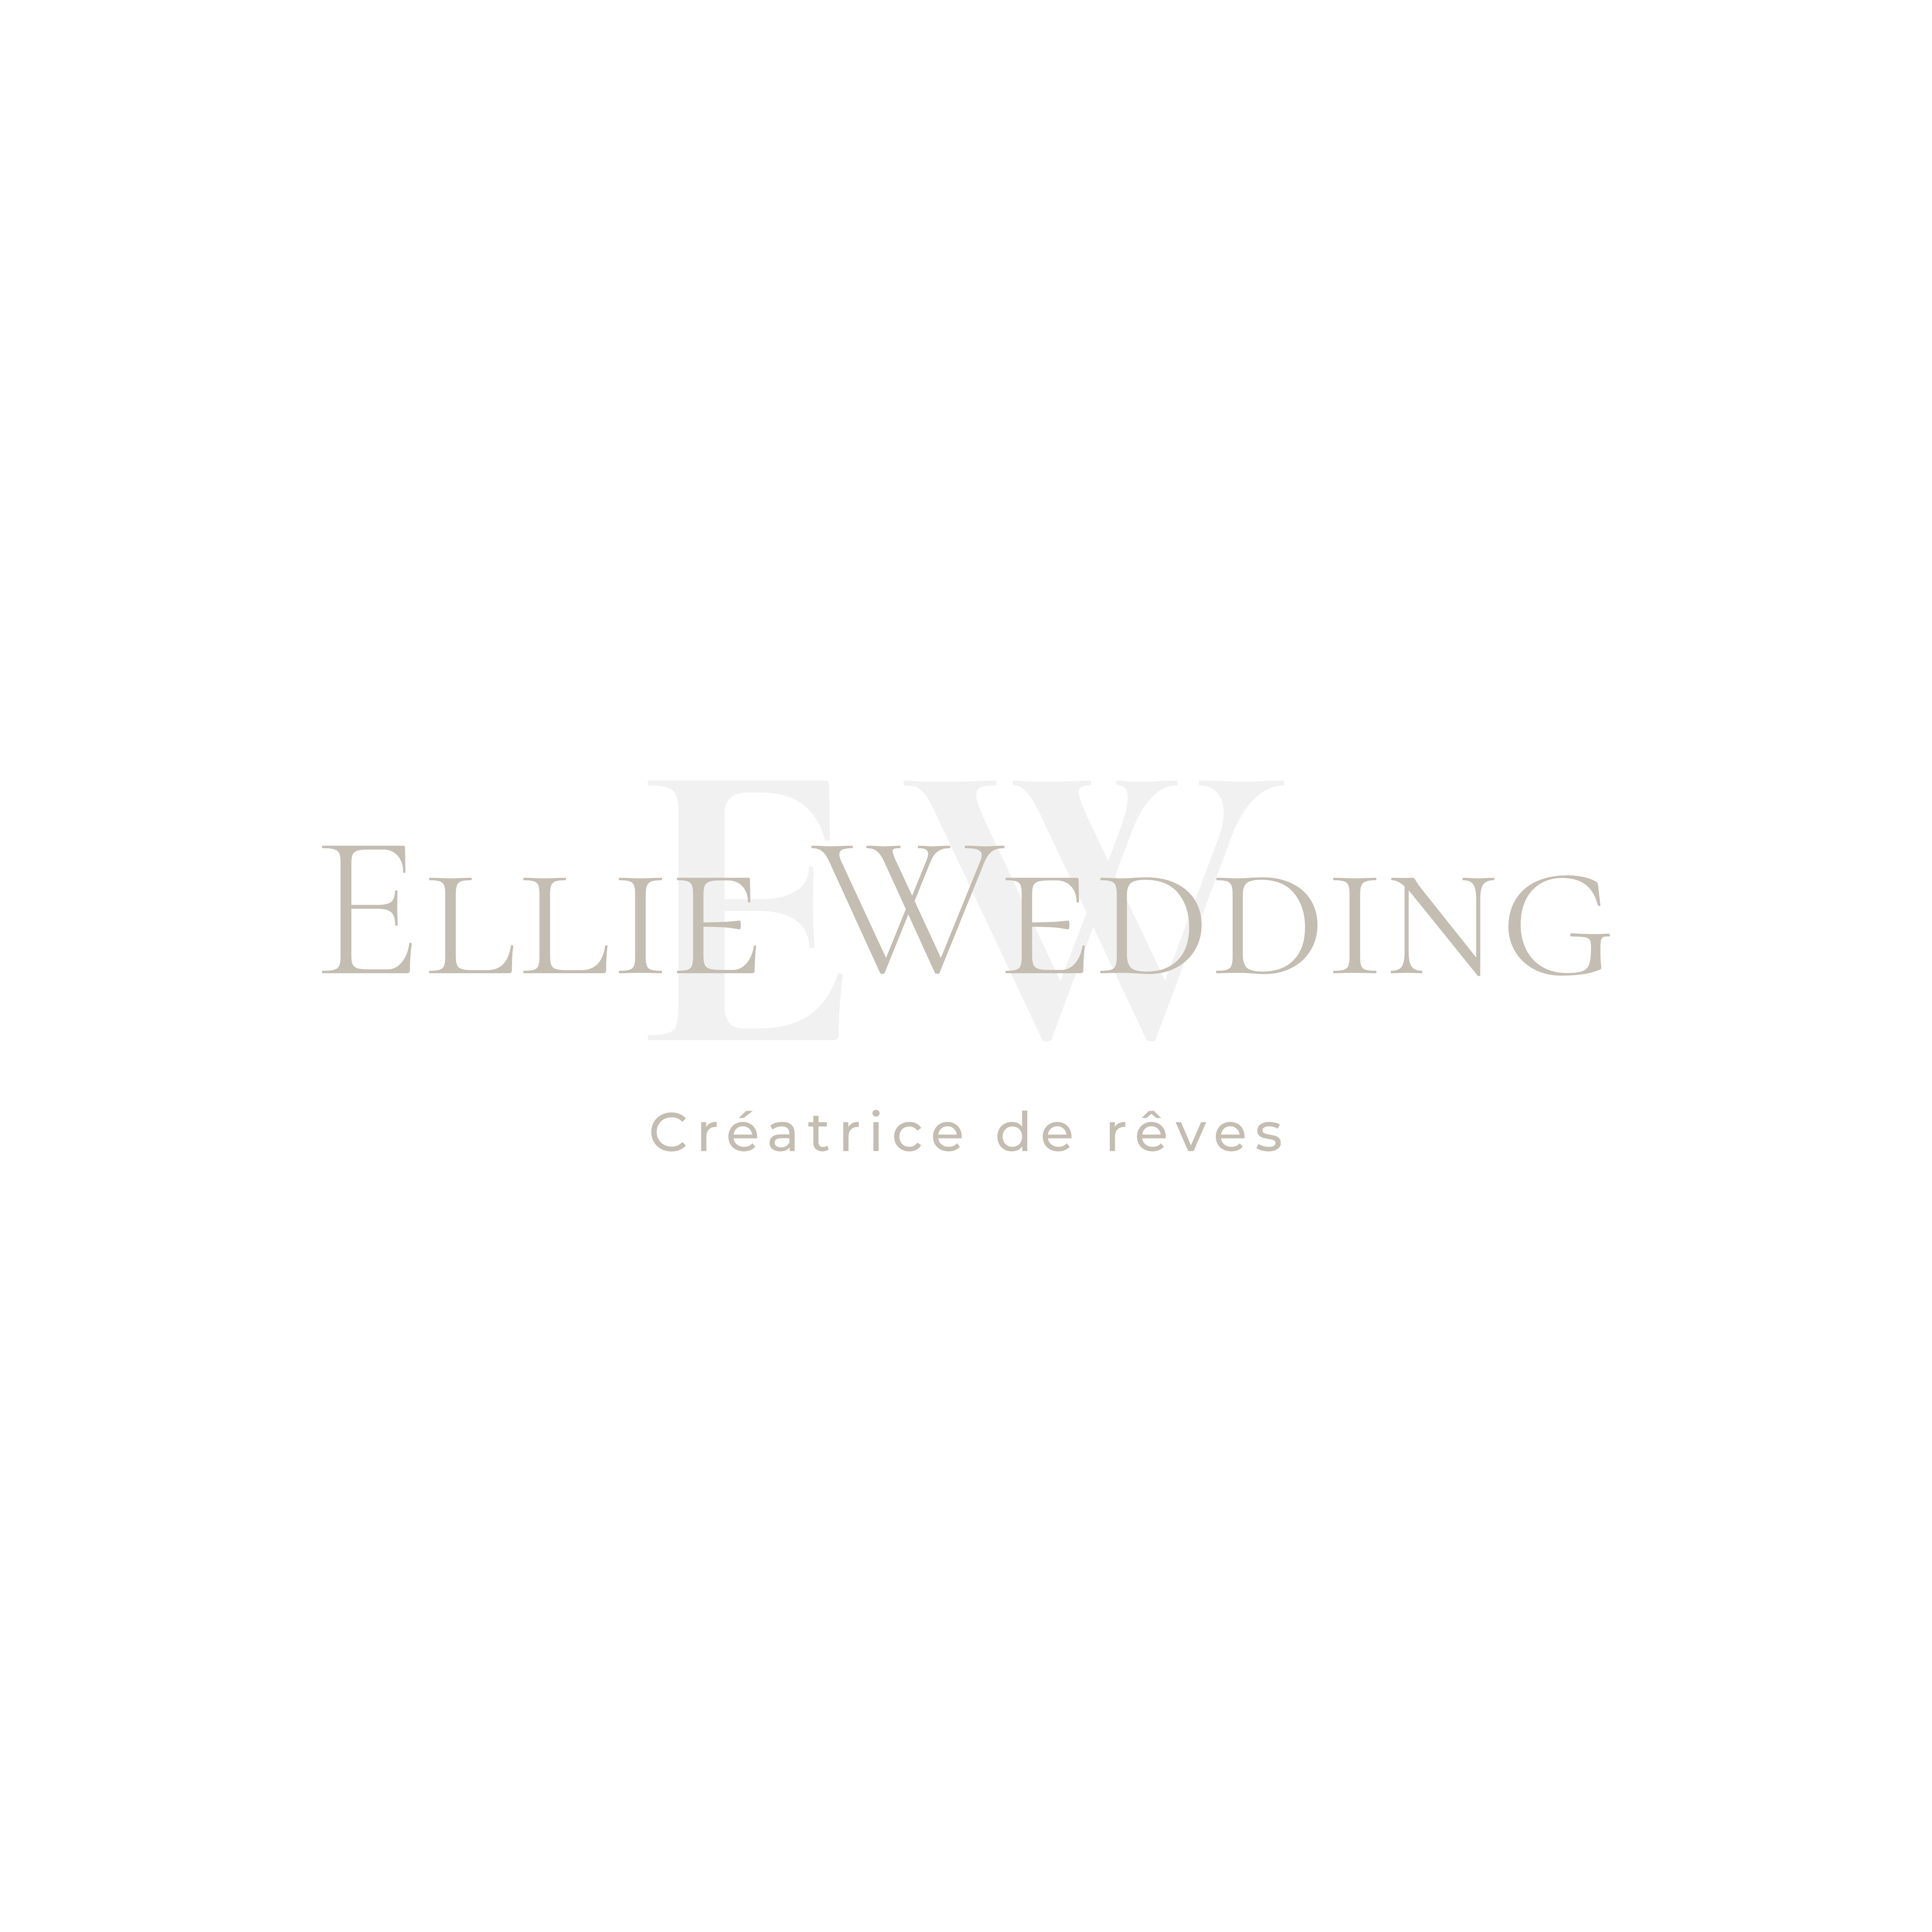 Ellie Wedding